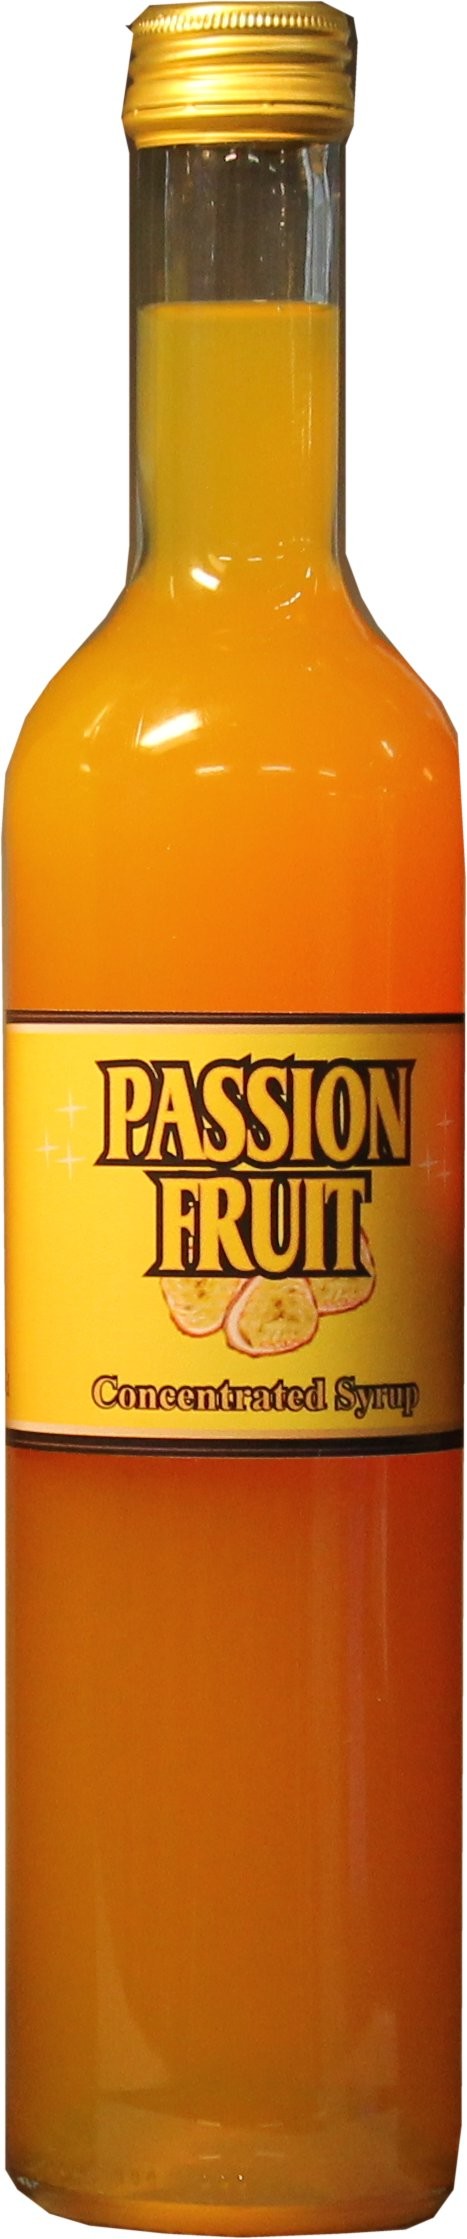 Passion fruit syrup (Passionfruktssyrup).